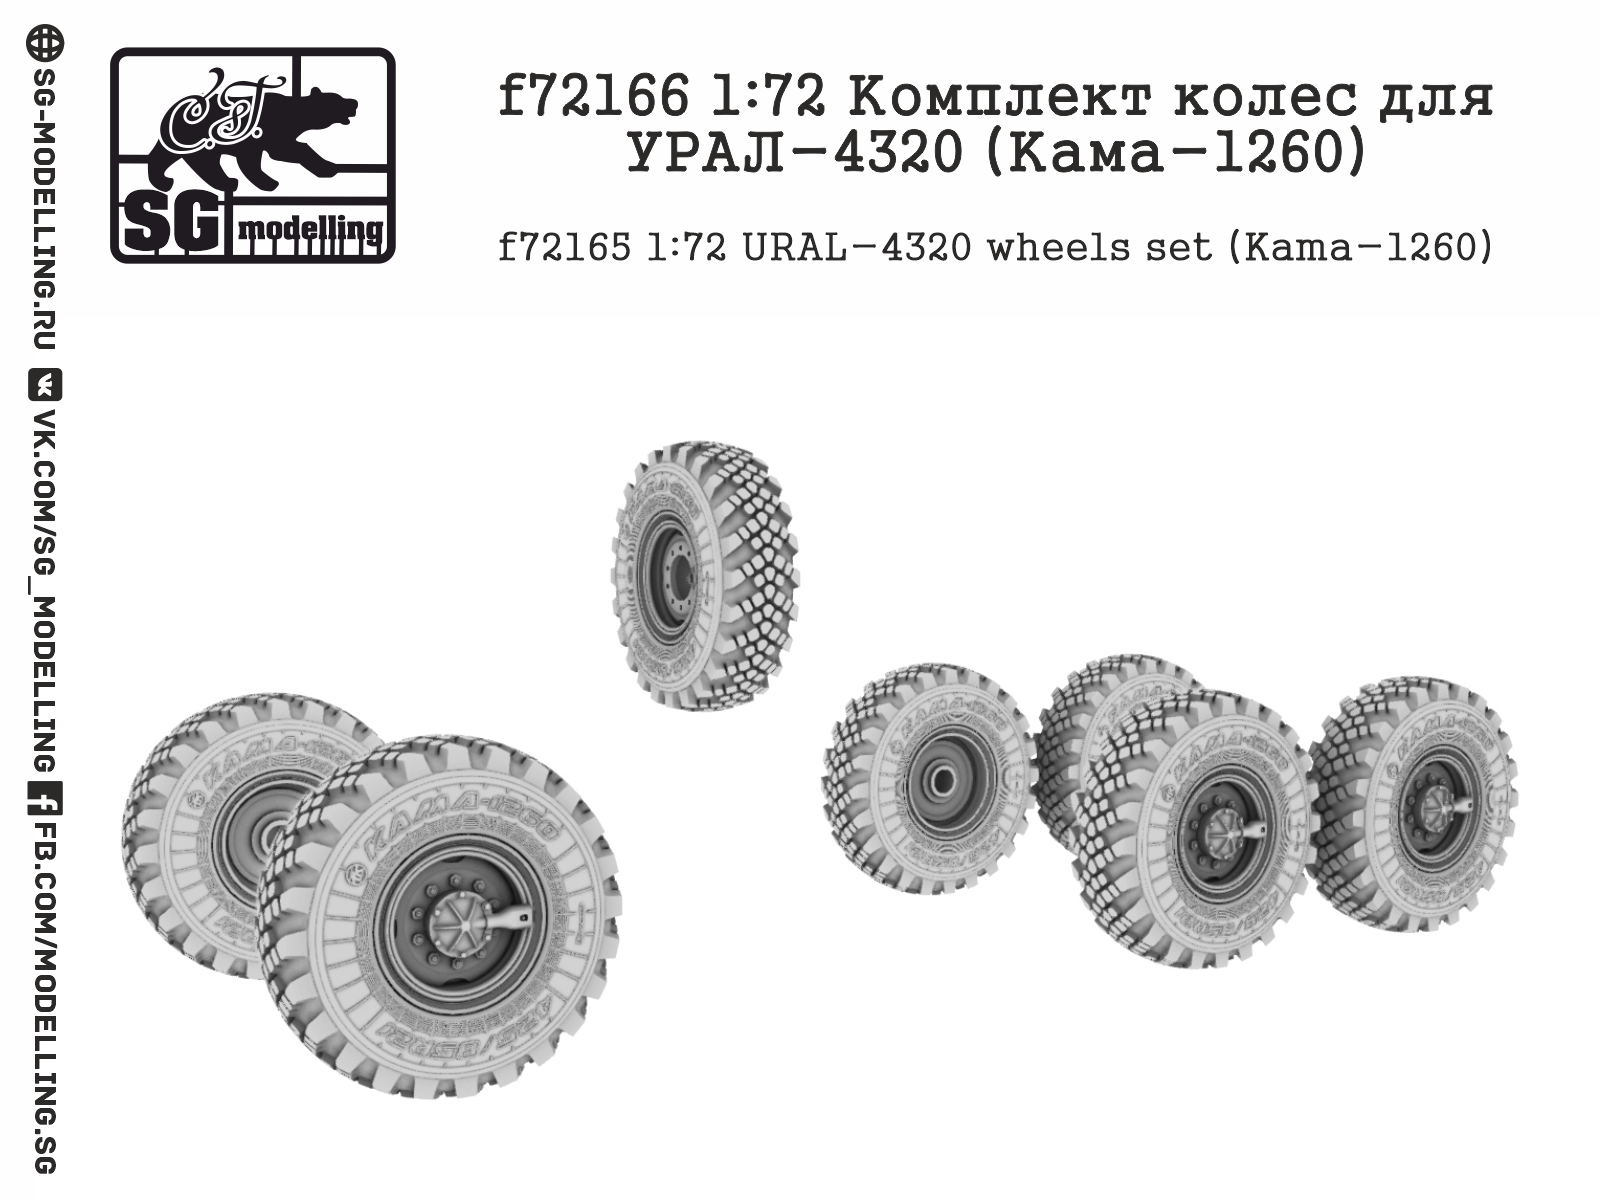 URAL-4320 (Kama-1260) wheels